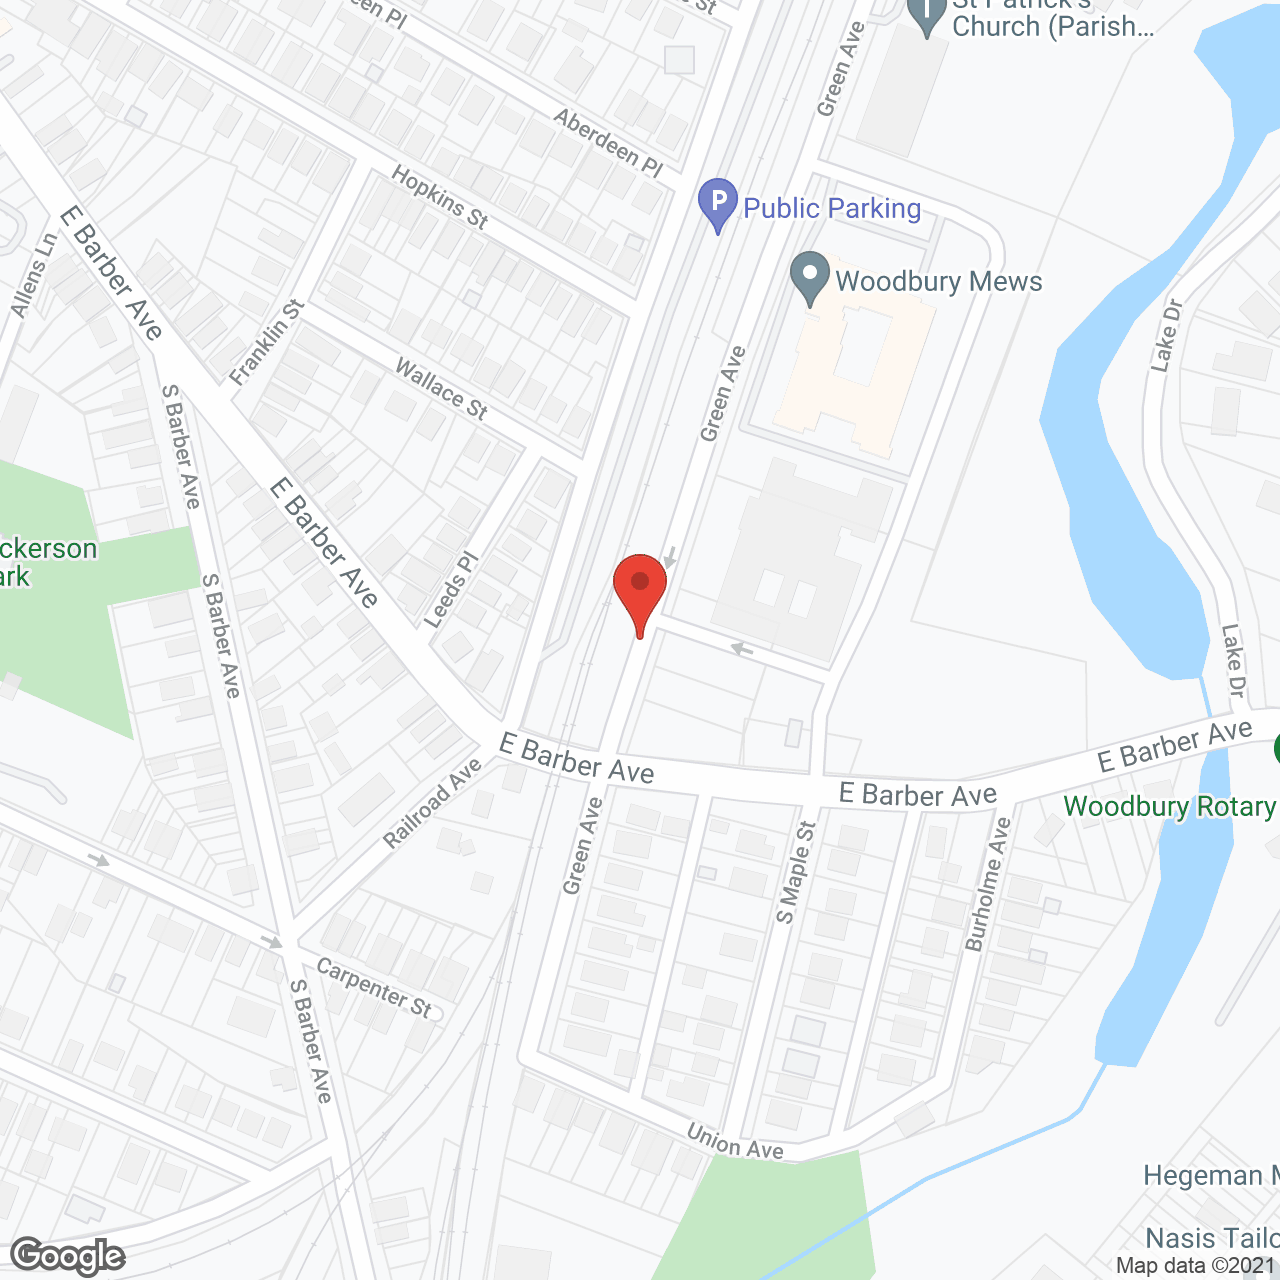 Woodbury Mews in google map